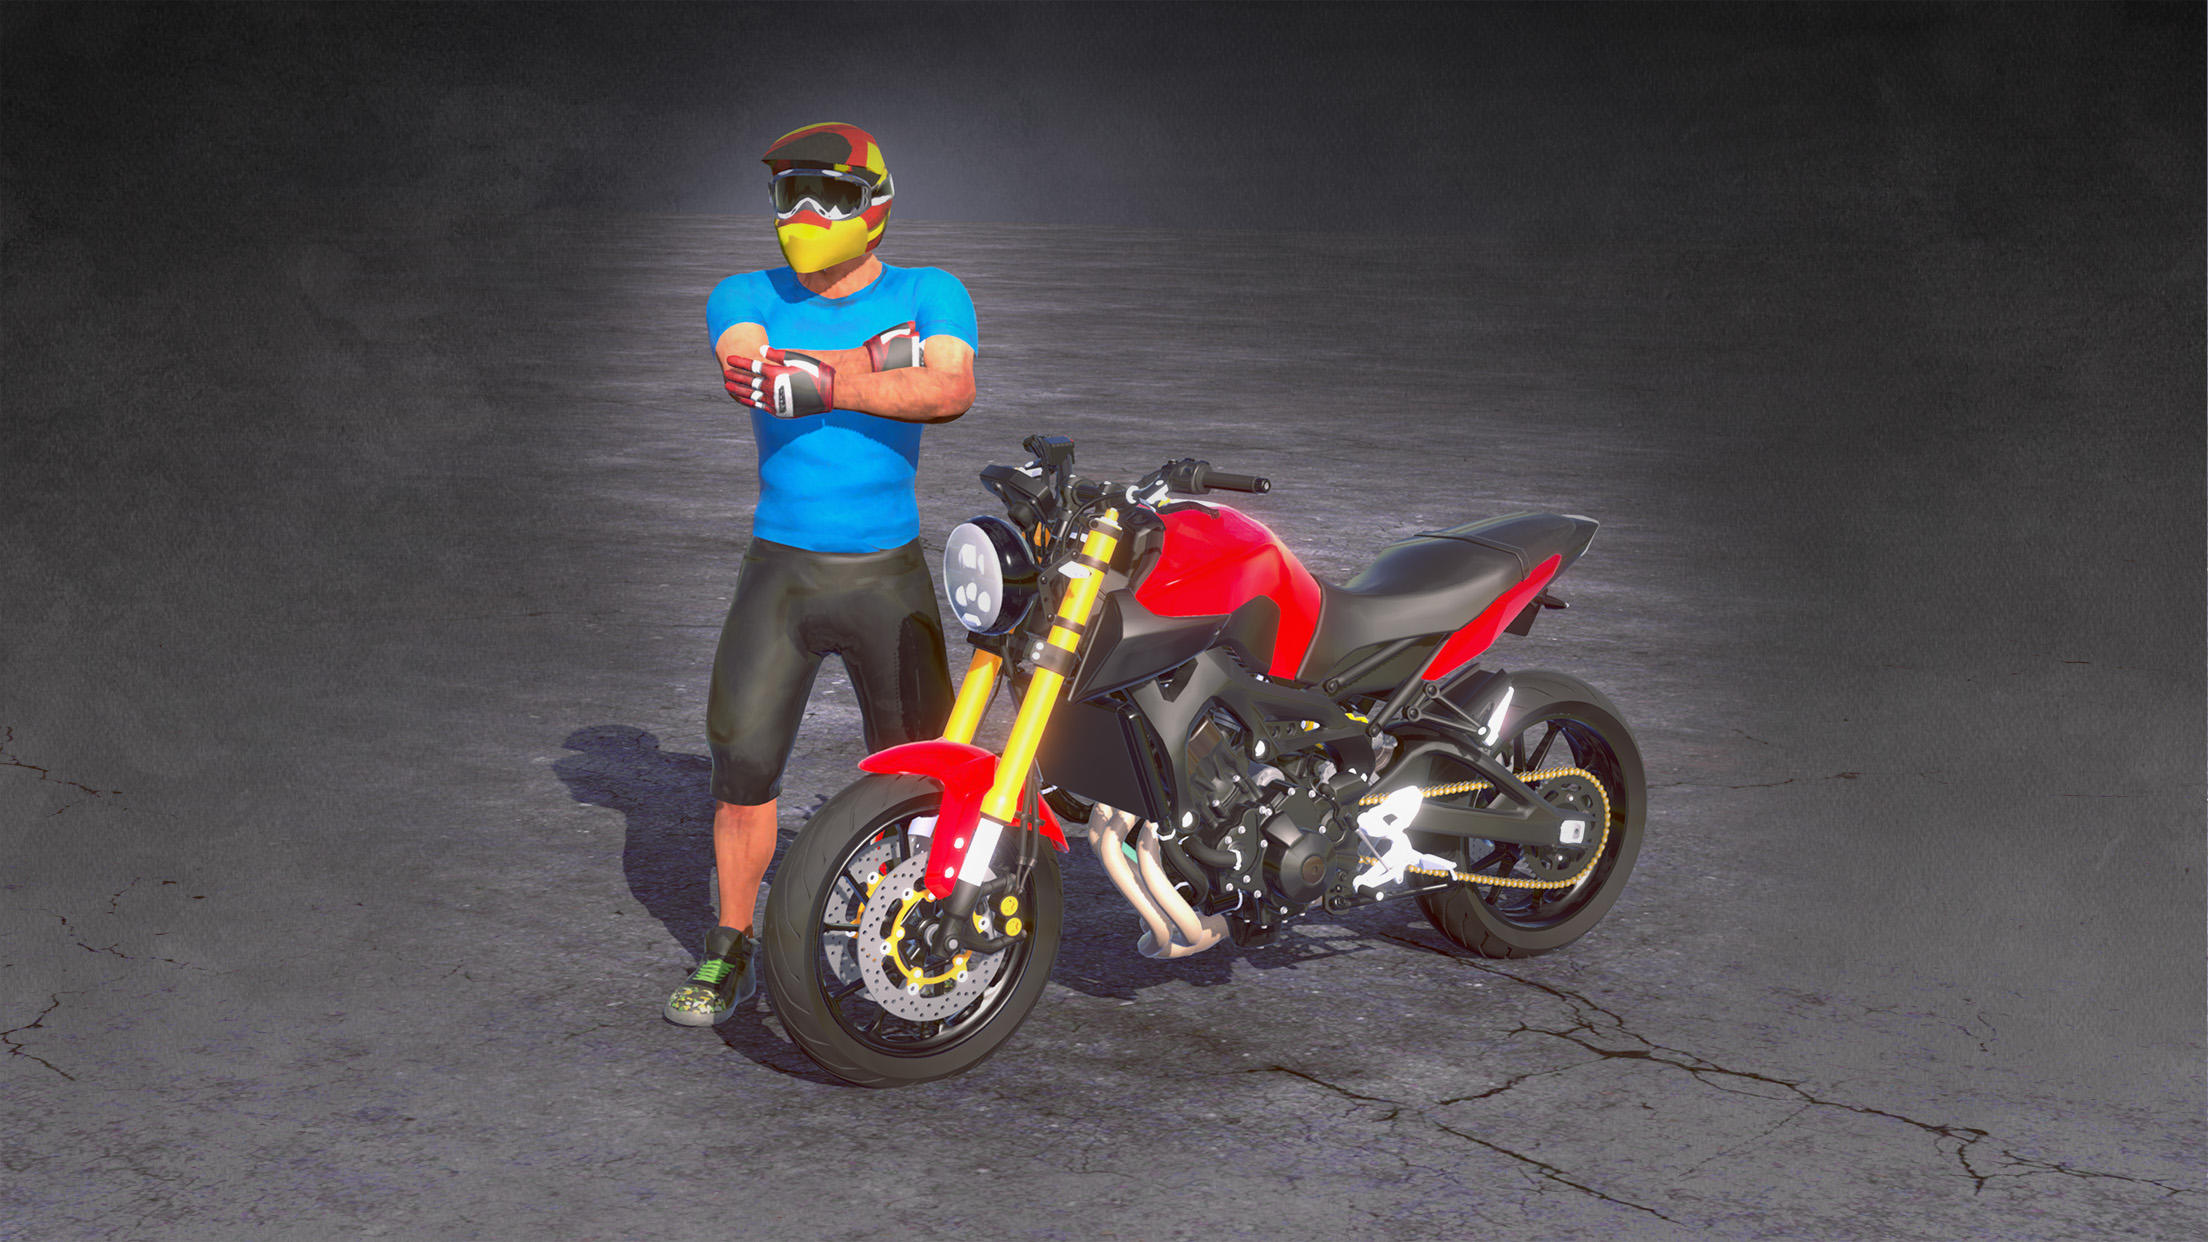 Download do APK de Jogos de Moto Motocicletas para Android